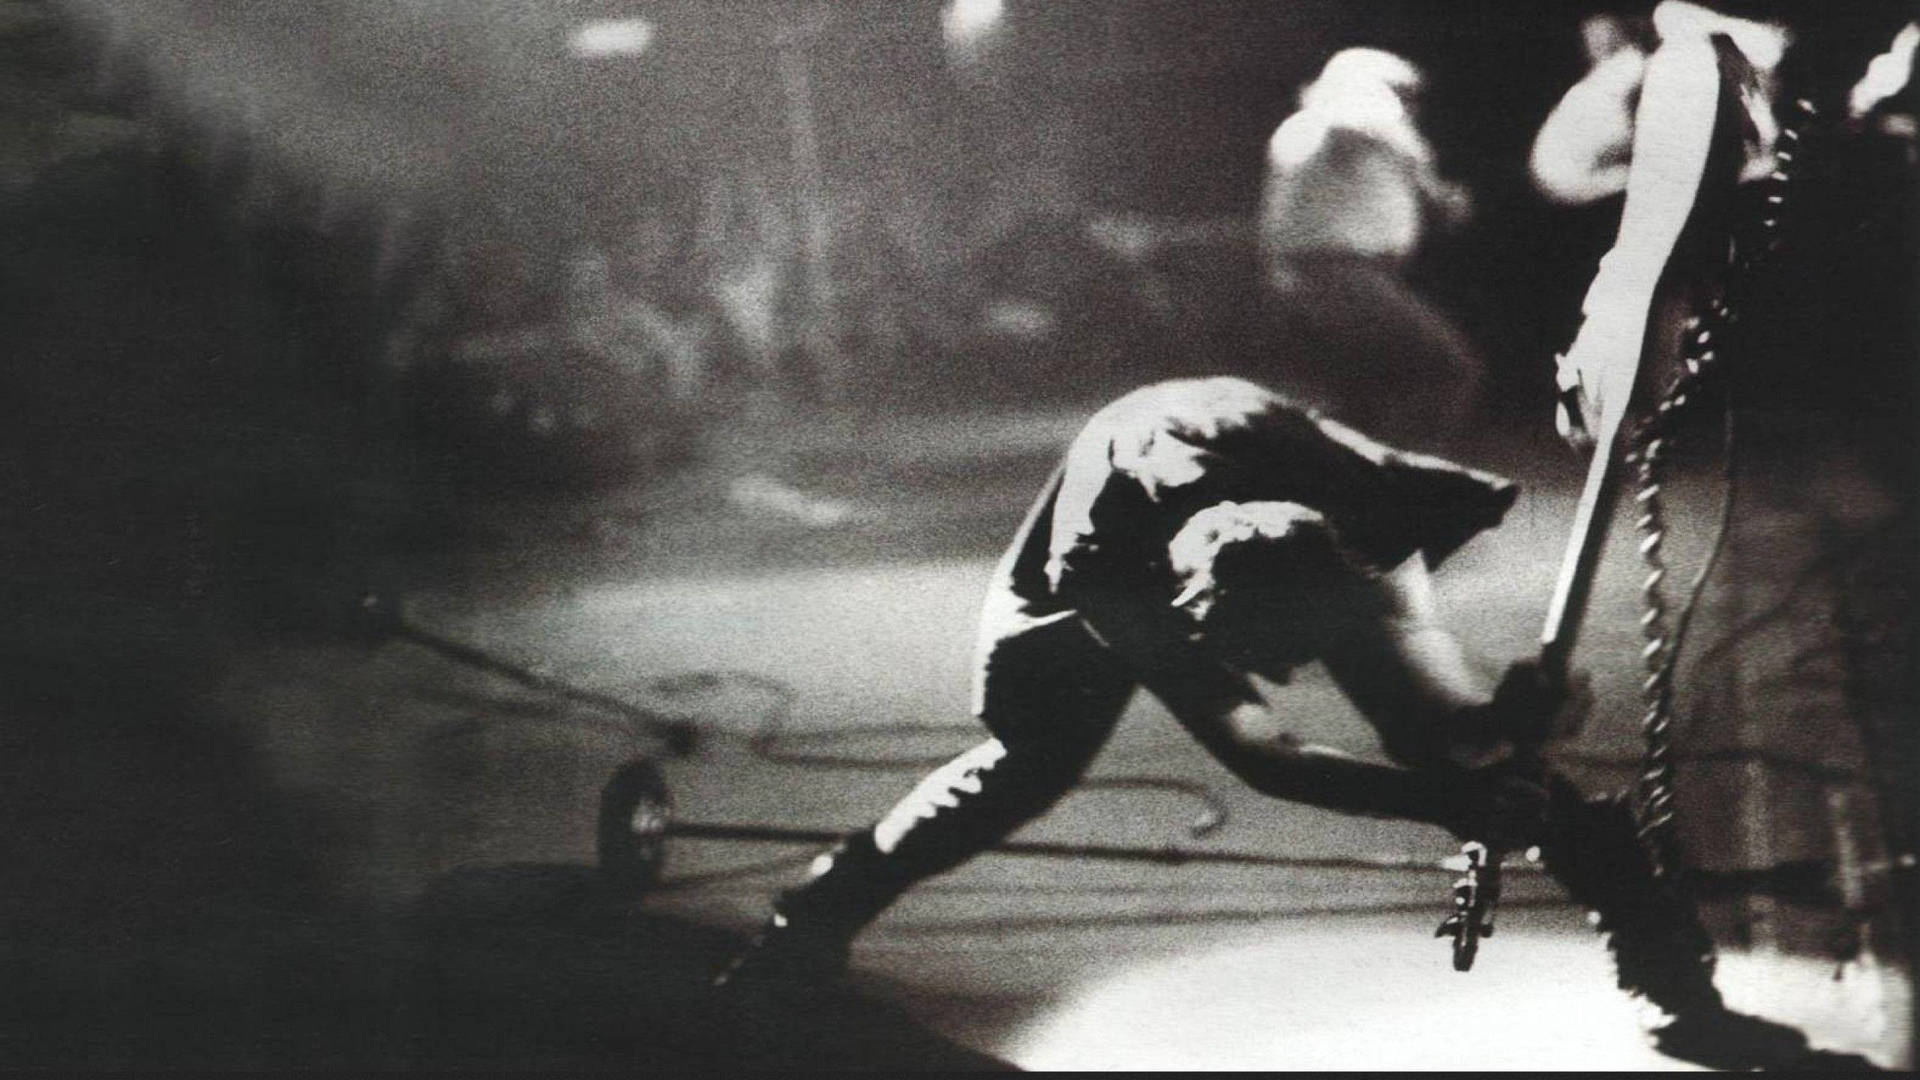 The Clash Paul Simonon Smashing Guitar